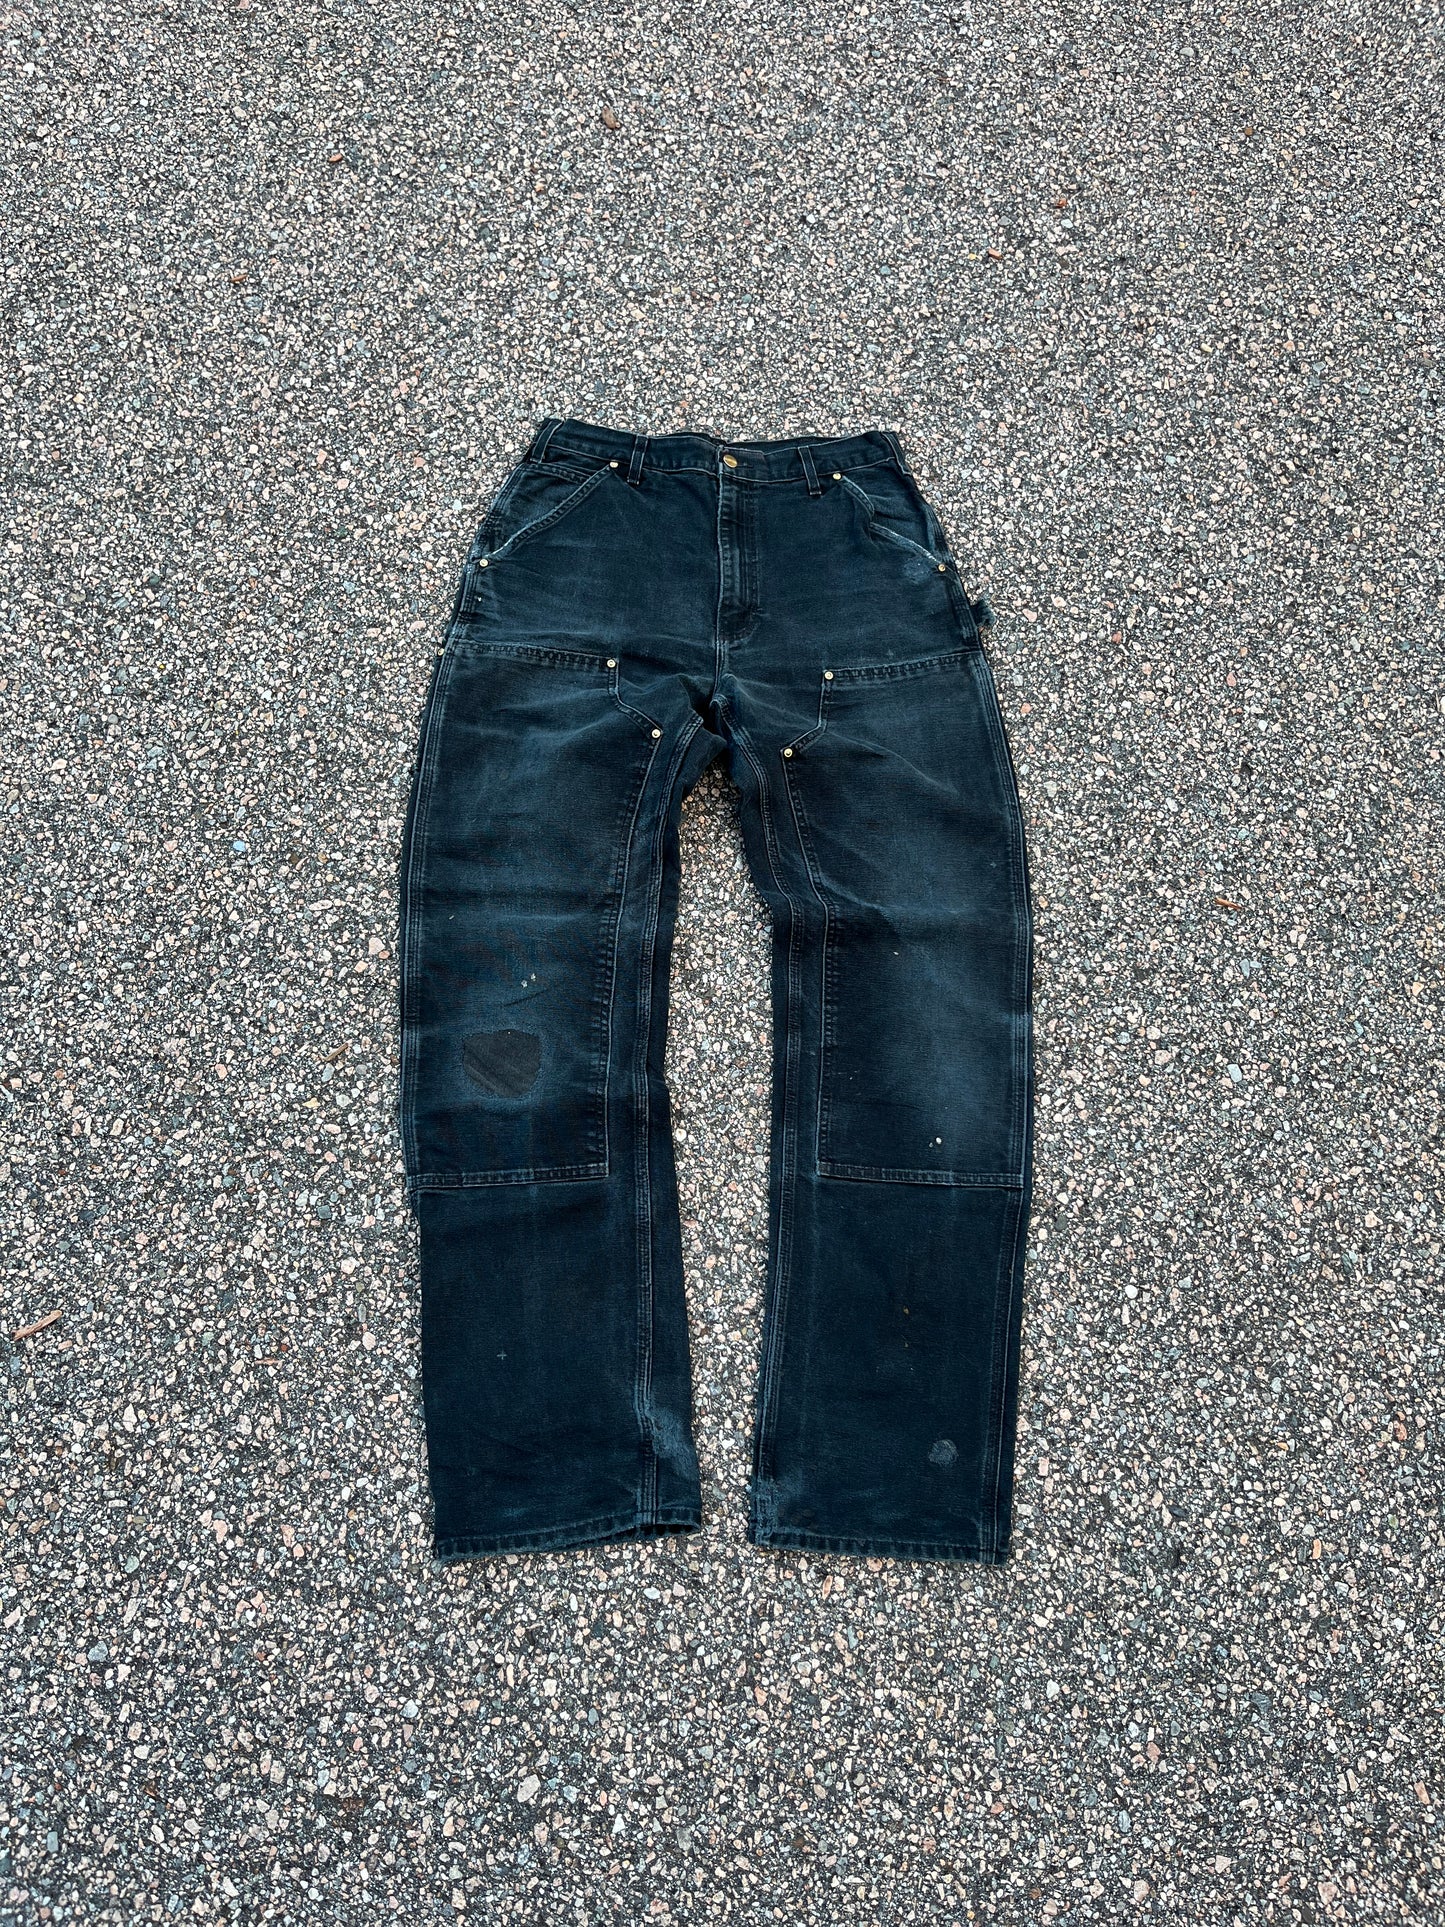 Faded Black Carhartt Double Knee Pants - 31 x 34